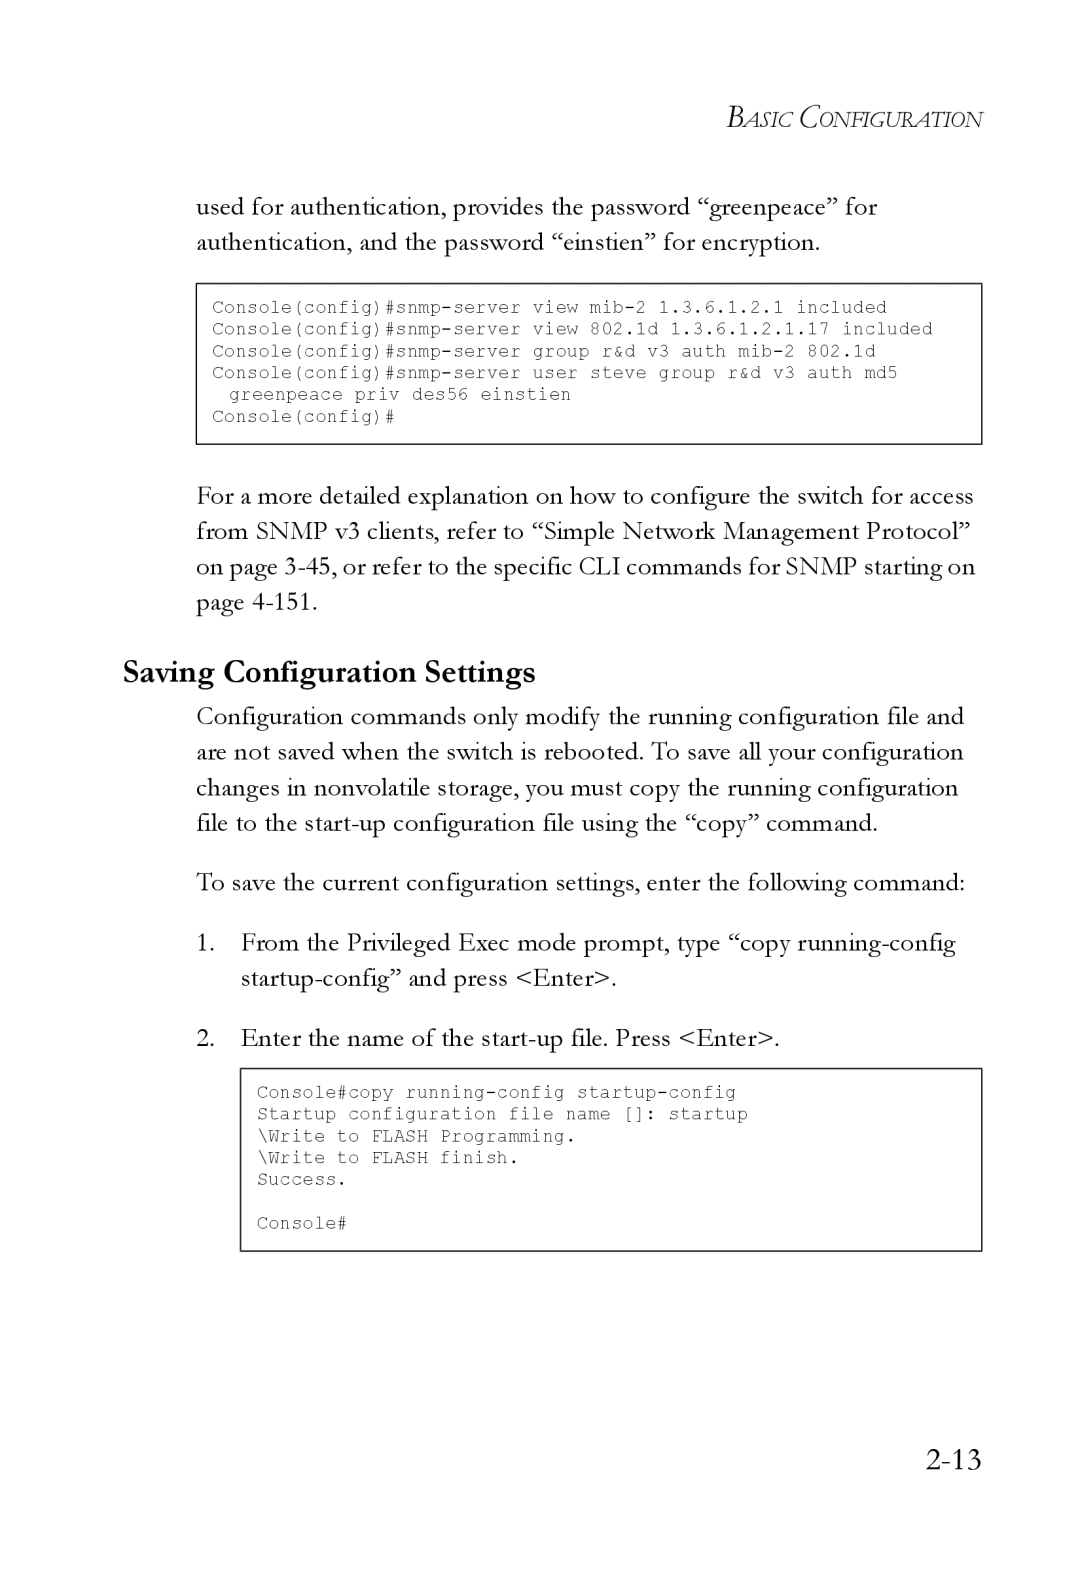 SMC Networks SMC6824M manual Saving Configuration Settings 